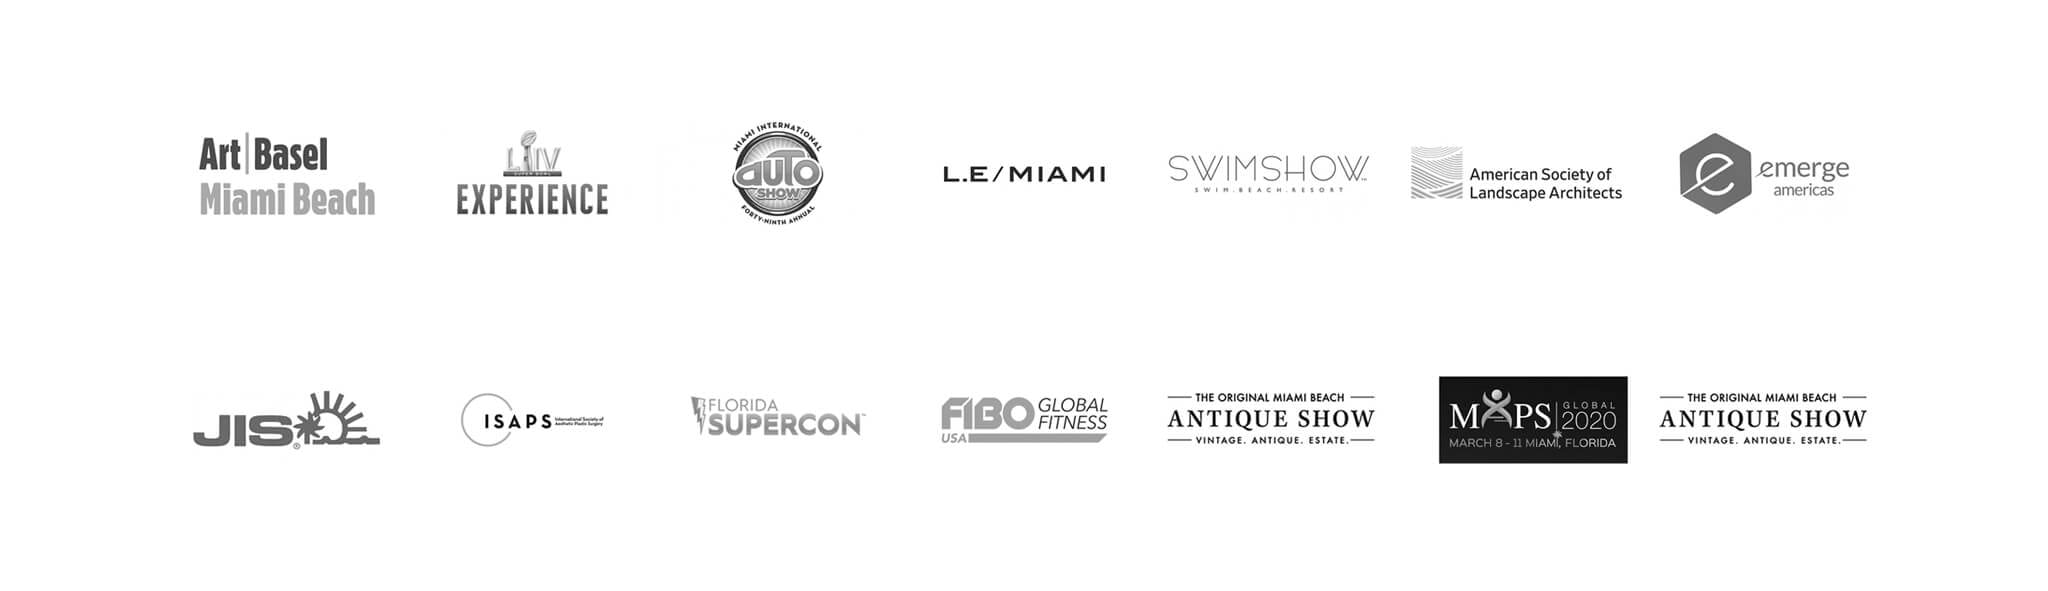 deep-sleep-studio-Miami-beach-convention-center-sample-event-logos-blk